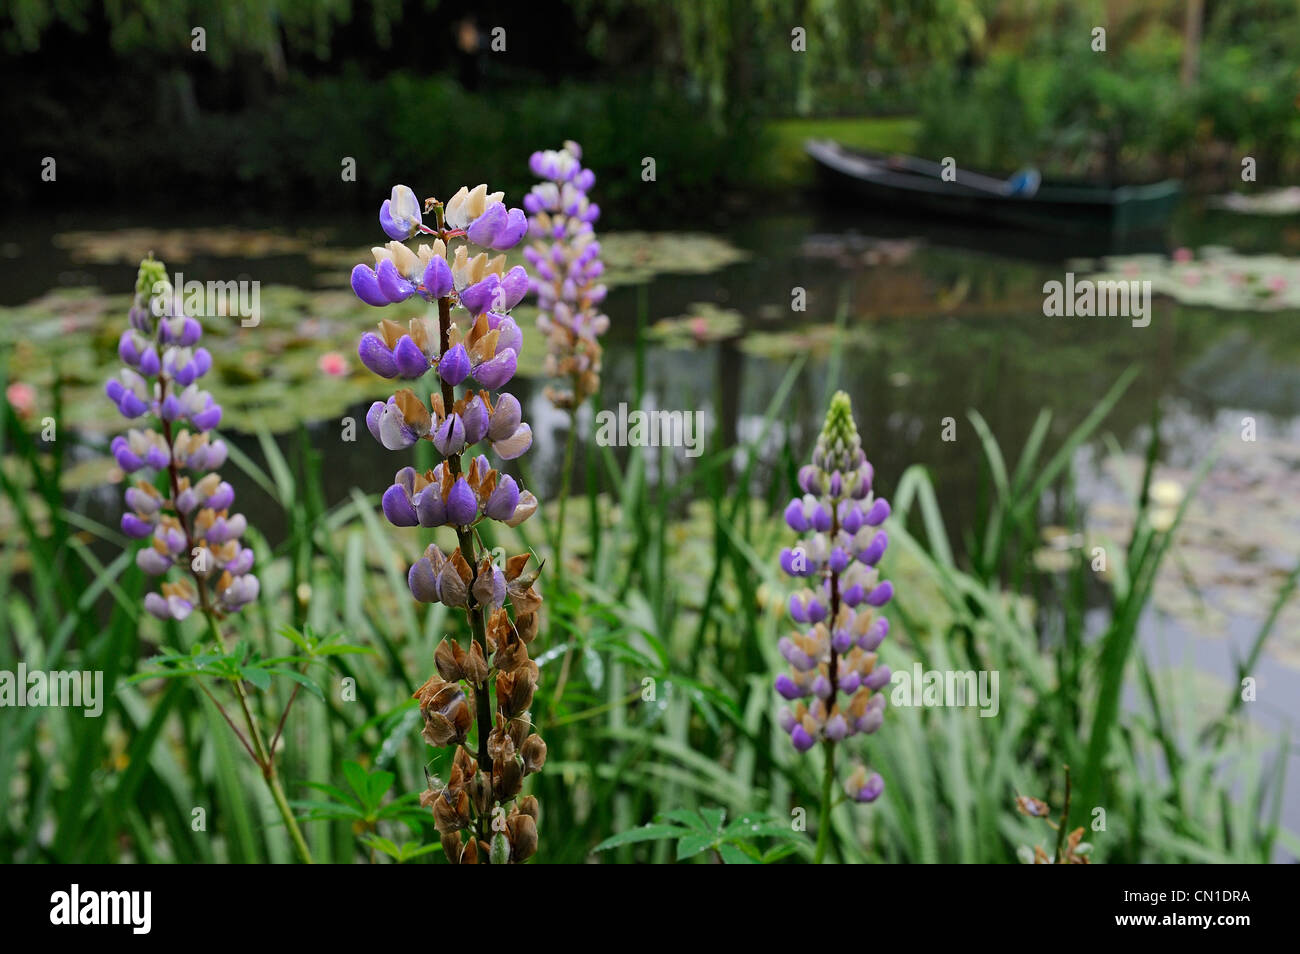 Francia, Eure, Giverny, Claude Monet giardino, Le Jardin d'Eau (acqua giardino) Foto Stock